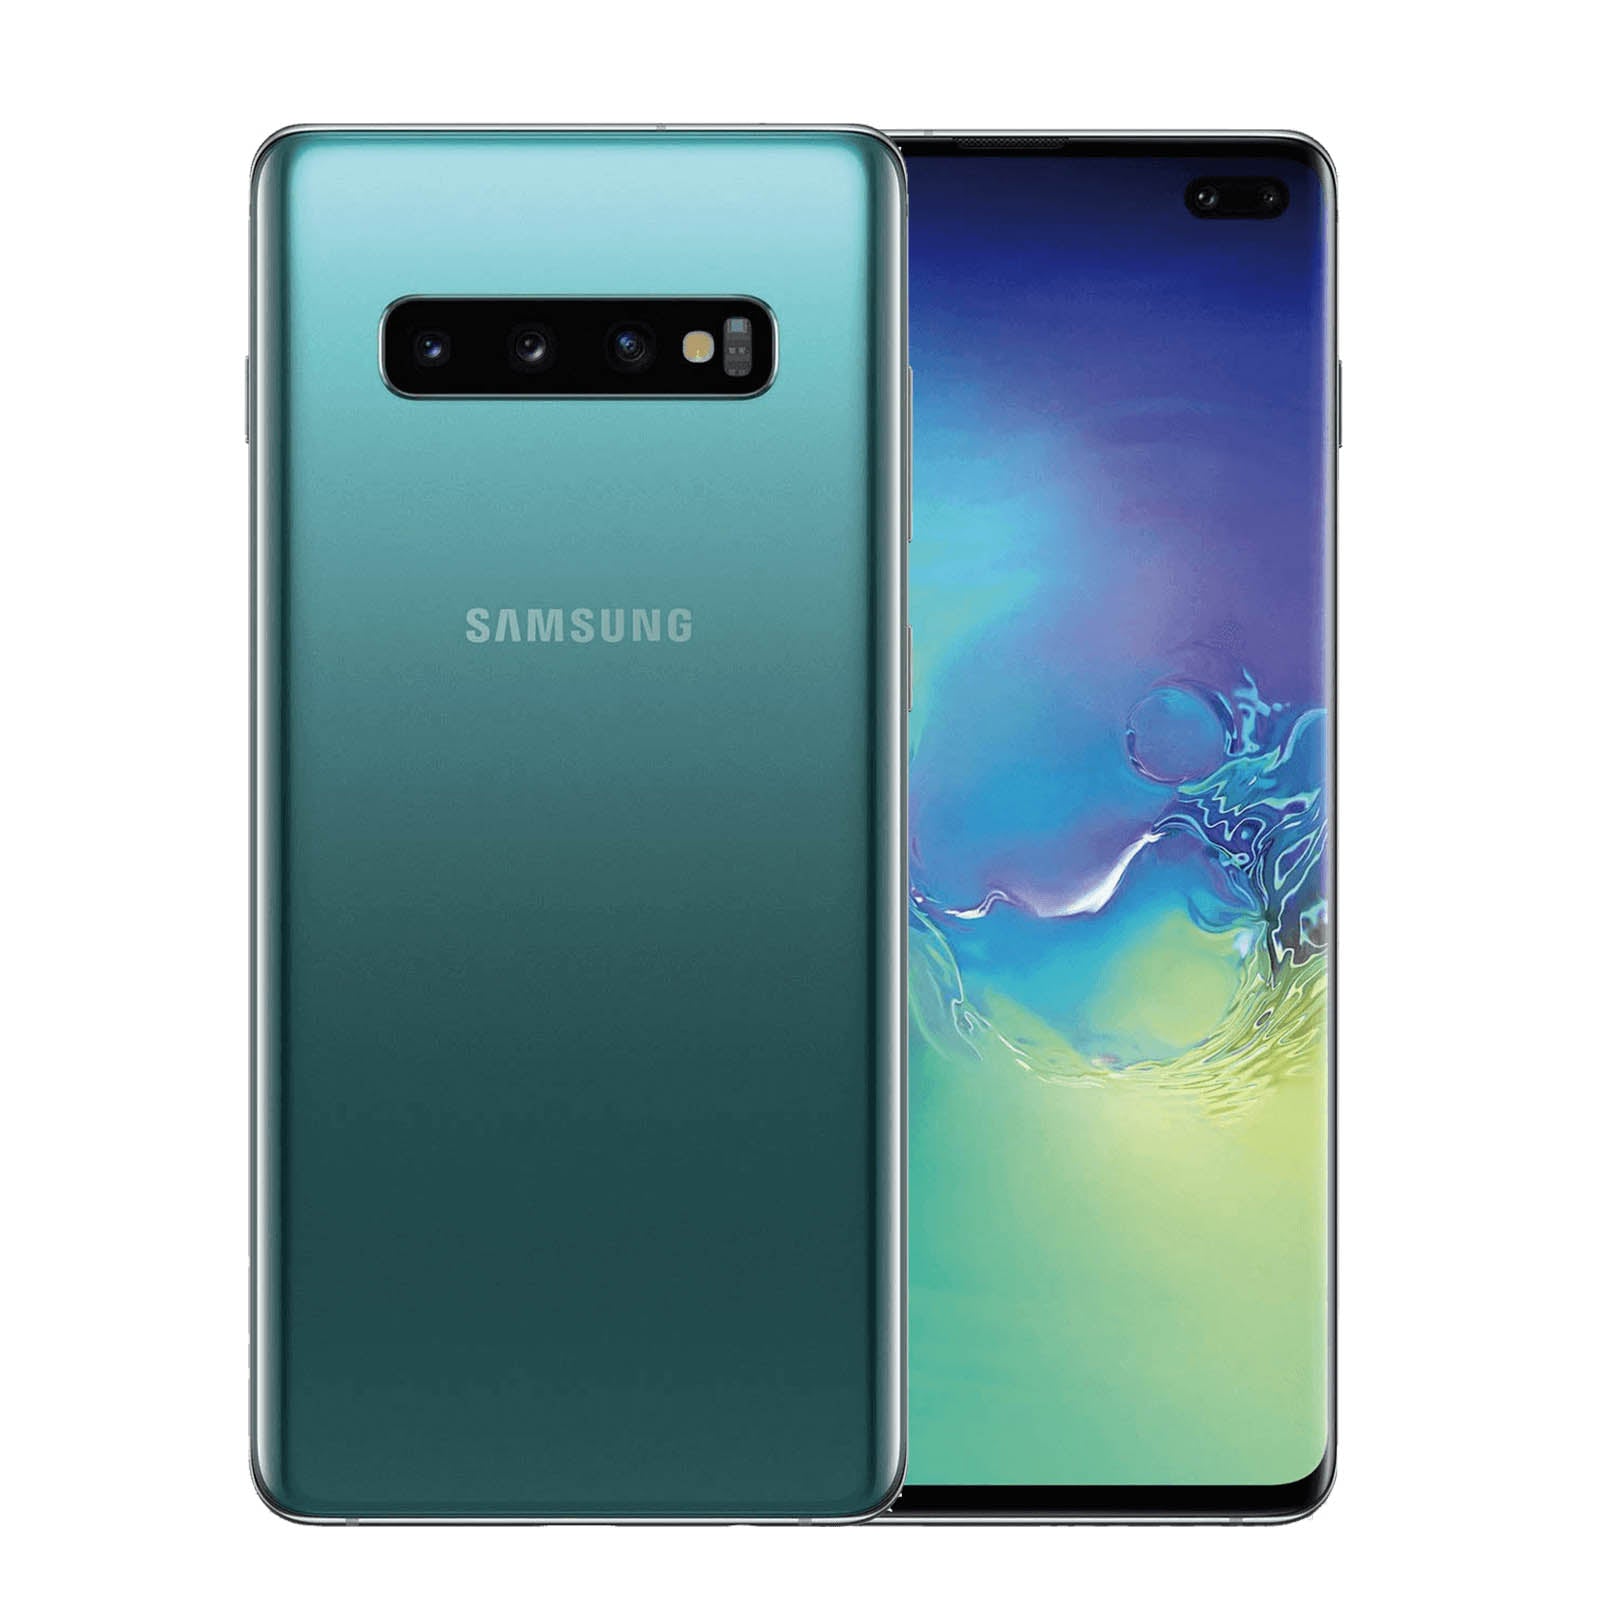 Samsung Galaxy S10 128GB Prism Green Very good - Unlocked